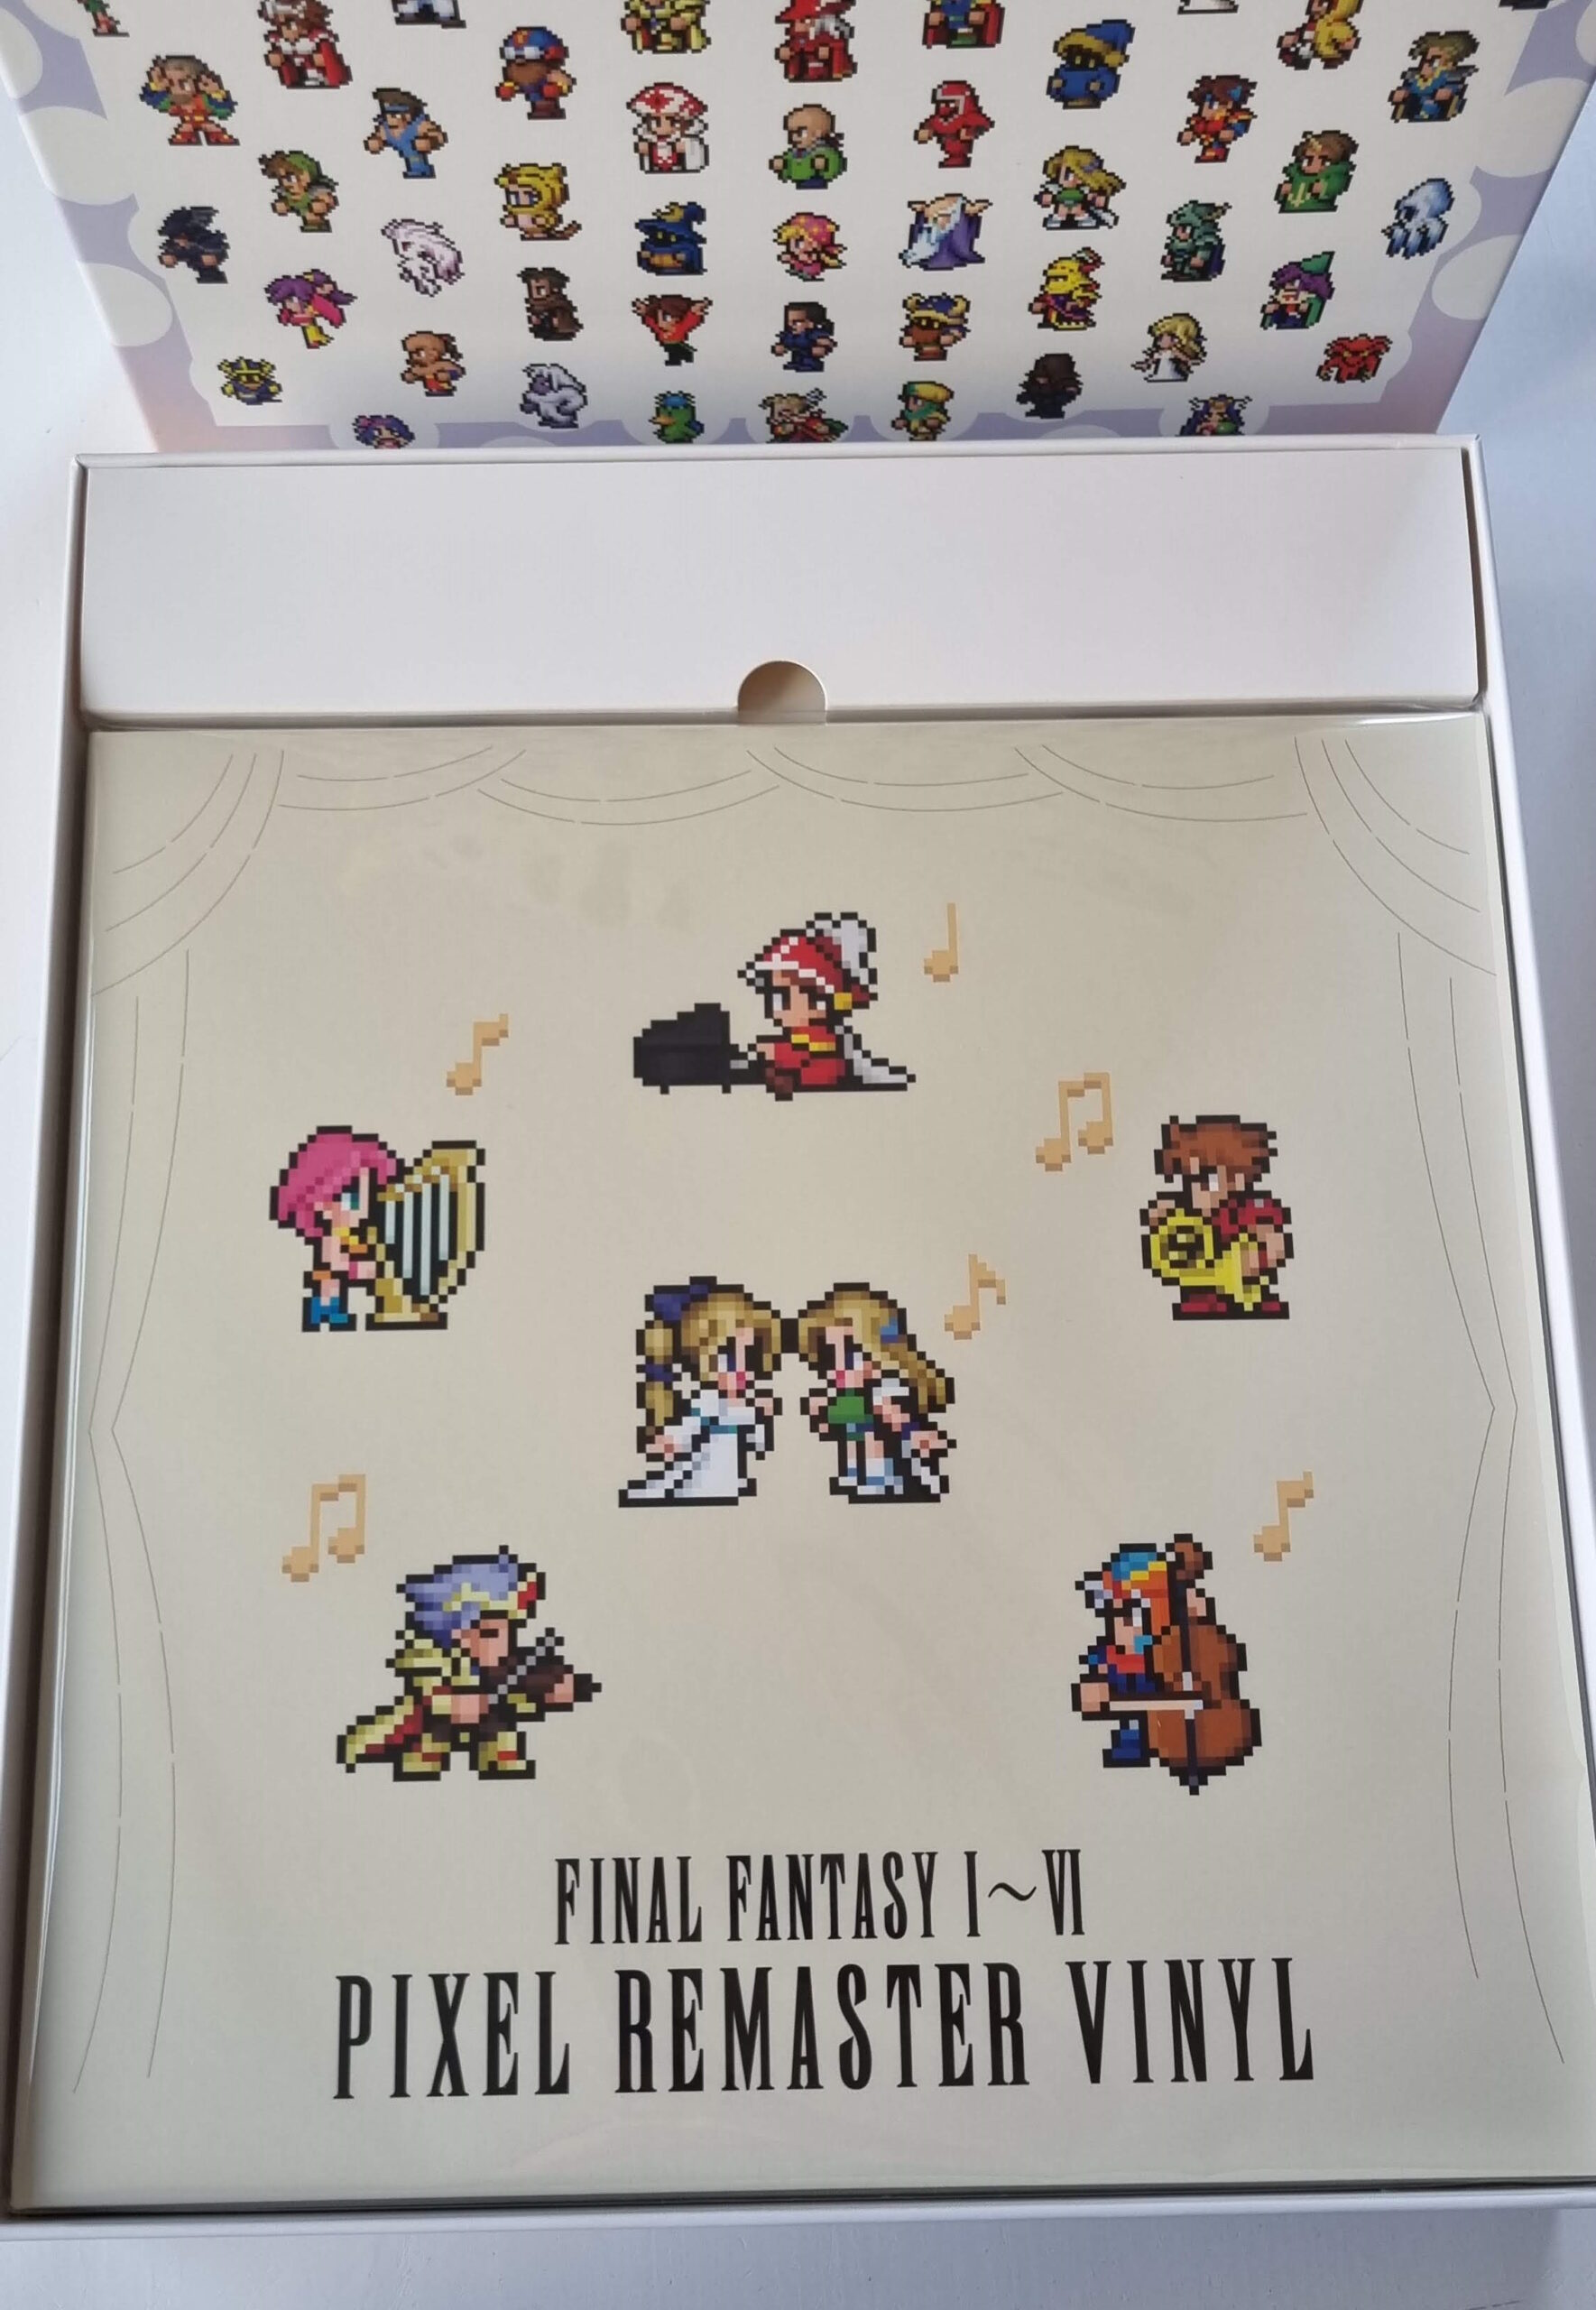 Final Fantasy Pixel Remaster collector's edition